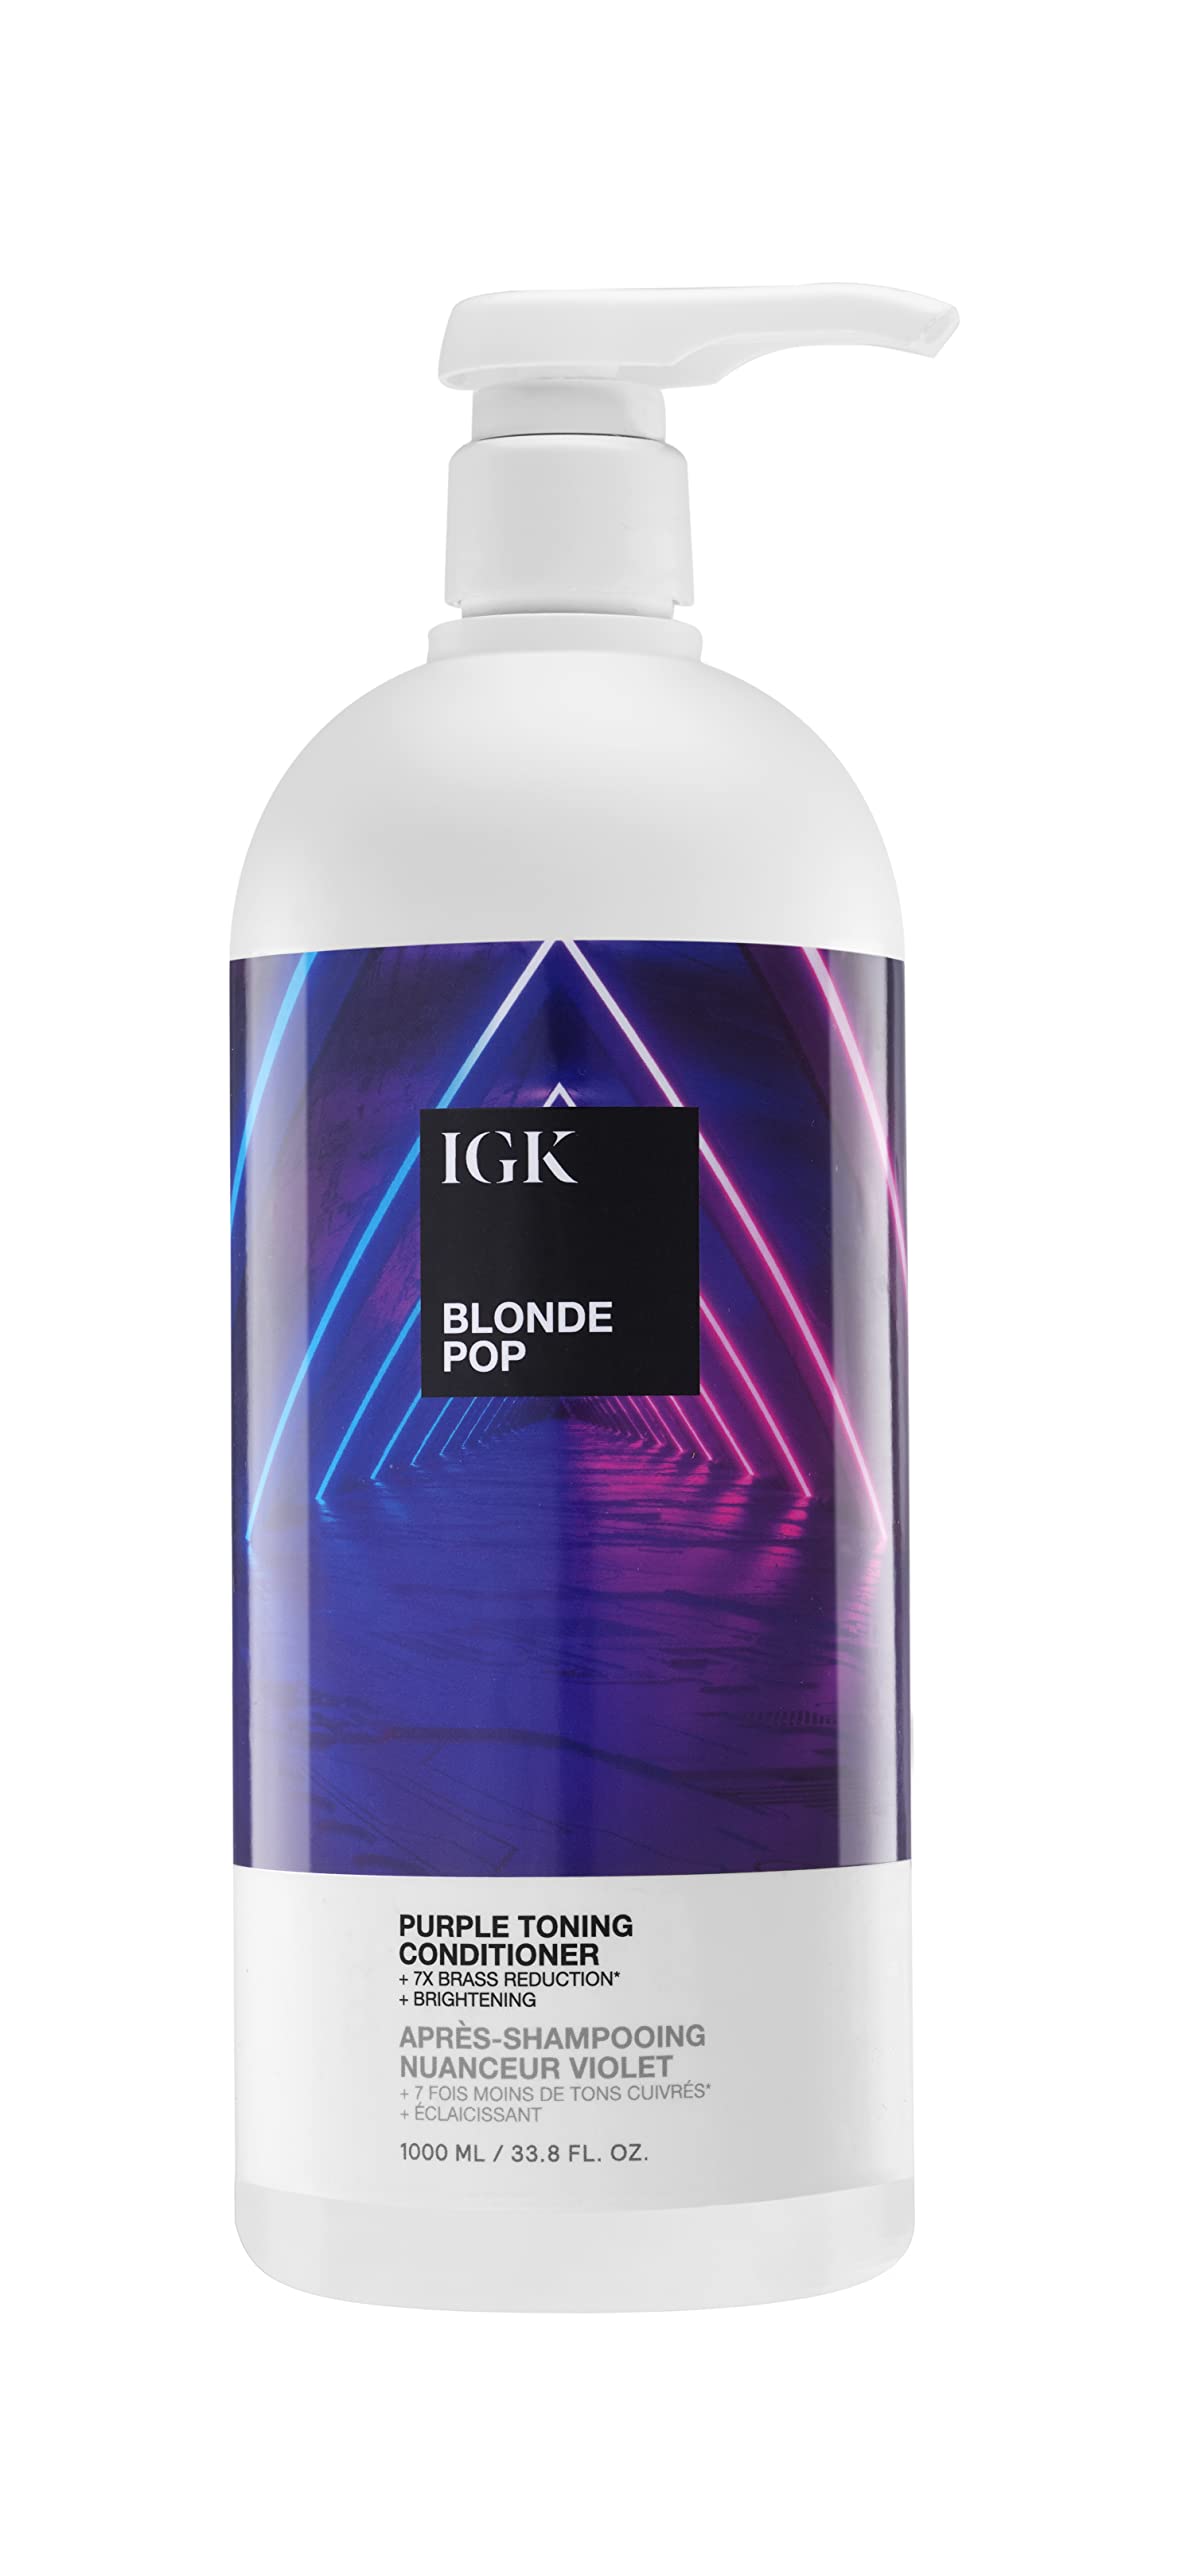 IGK BLONDE POP Purple Toning Conditioner